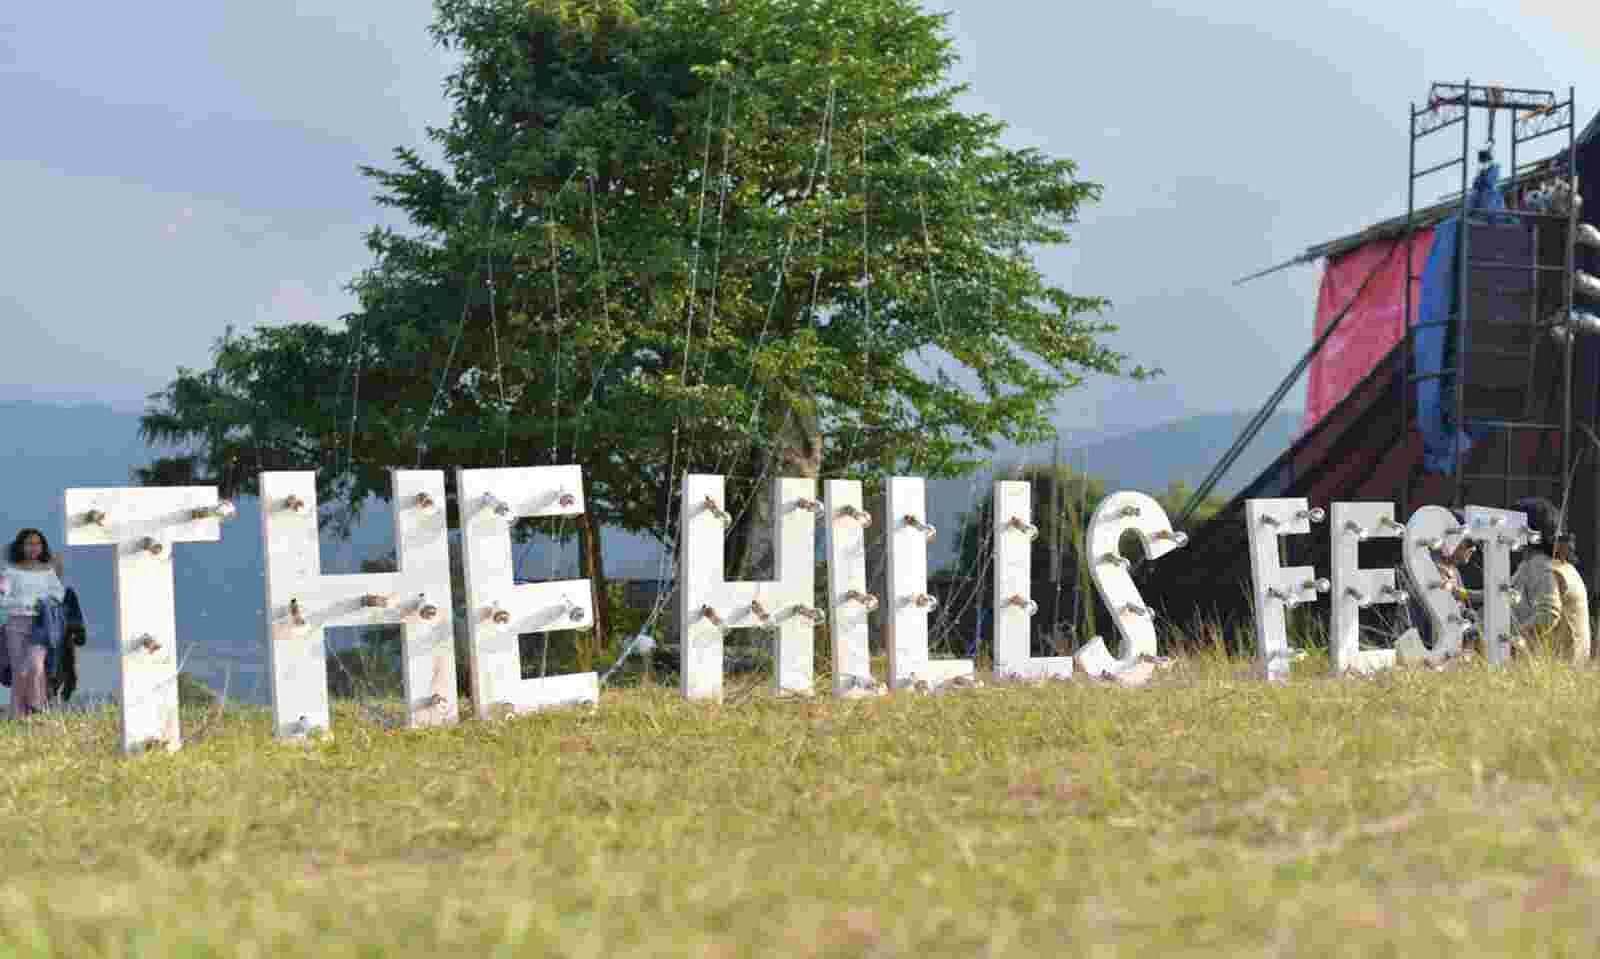 The Hills Festival